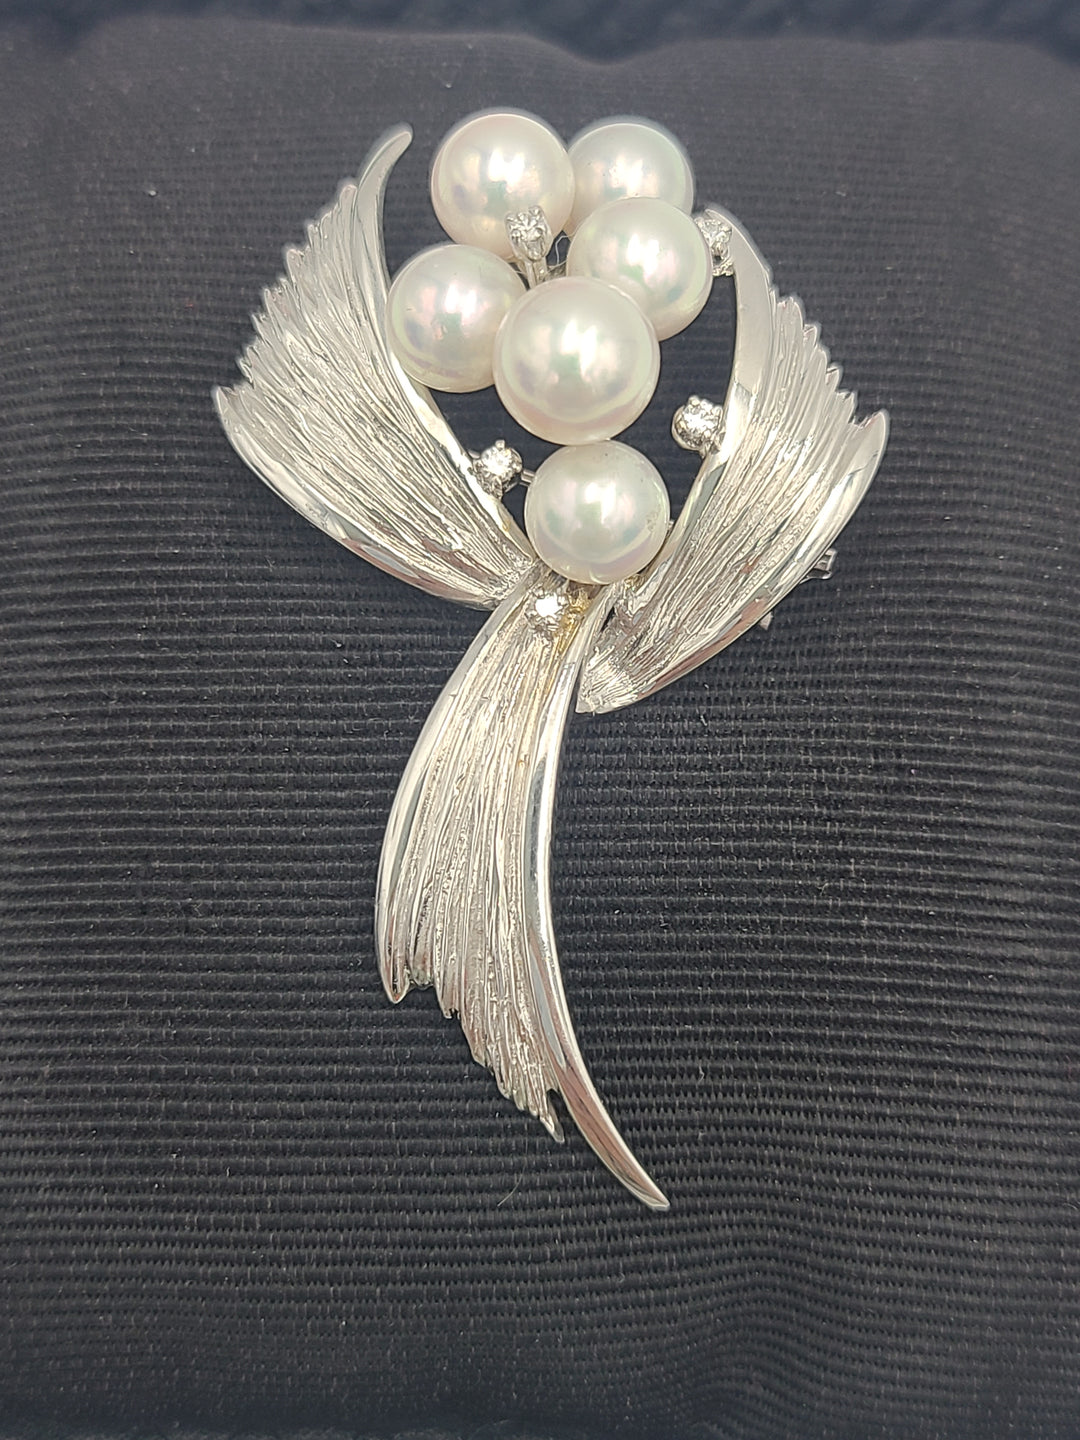 k820 Stunning Ladies Vintage 18kt White Gold Freshwater Pearl and Diamond Pendant